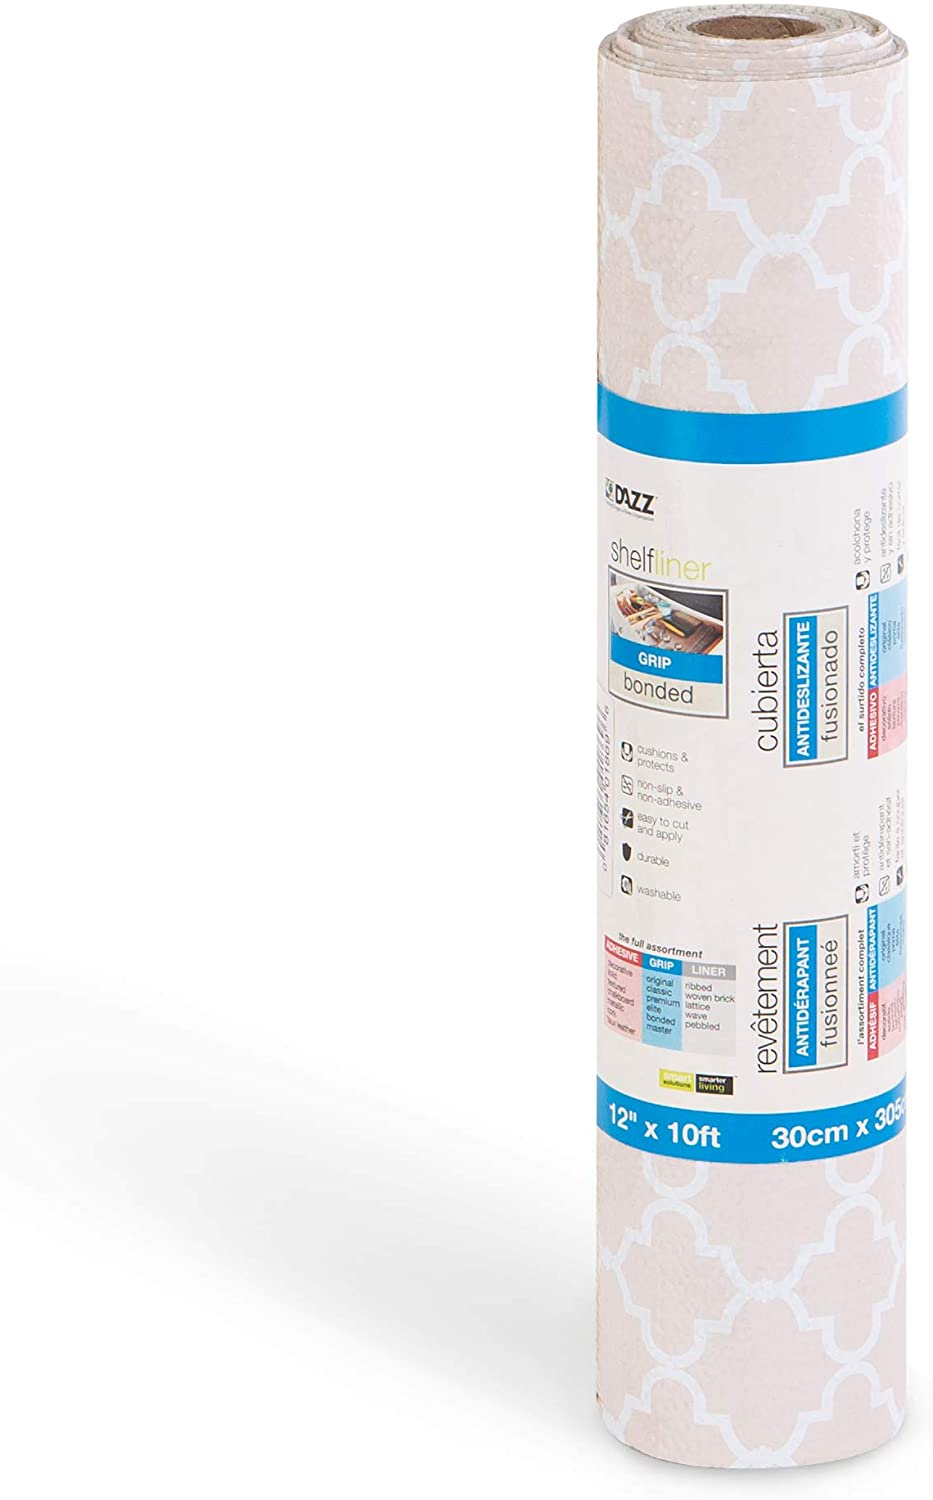 Bonded Grip Shelf Liner - 12 Inch x 10 Feet - Non-Adhesive - Smart Design® 26